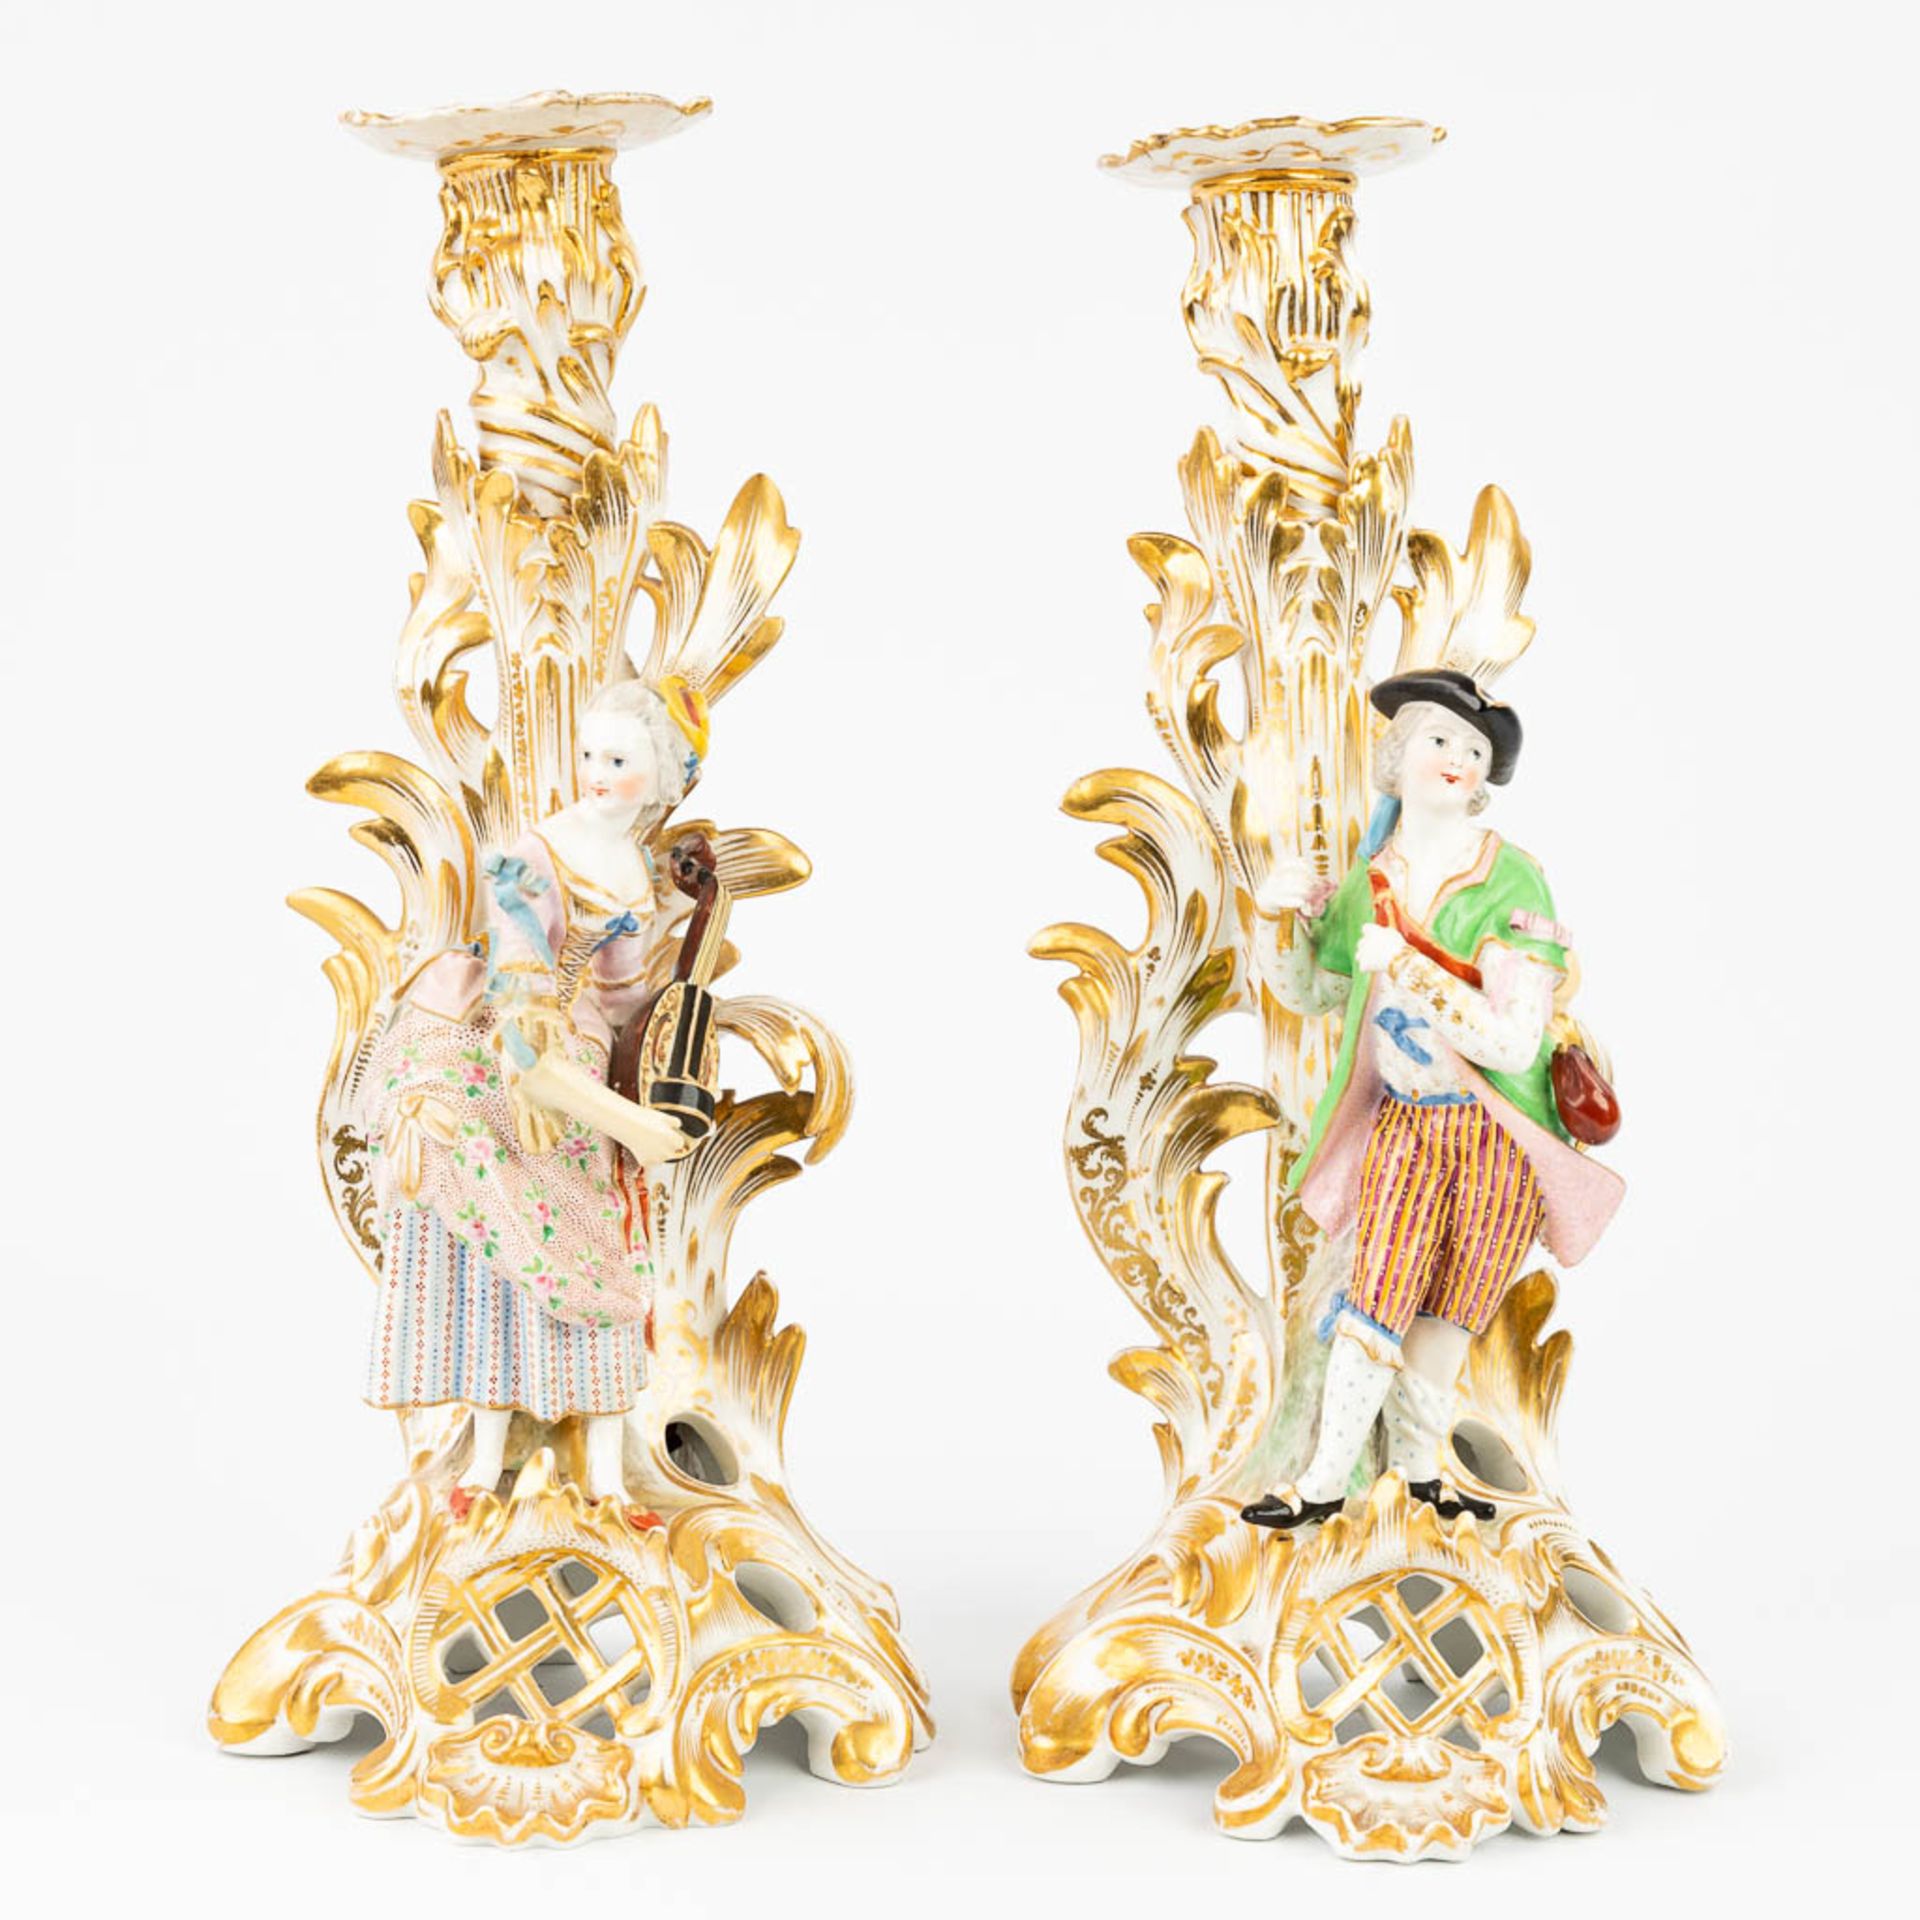 JACOB-PETIT (1796-1868) A pair of candlesticks made of porcelain (13 x 14 x 34cm)